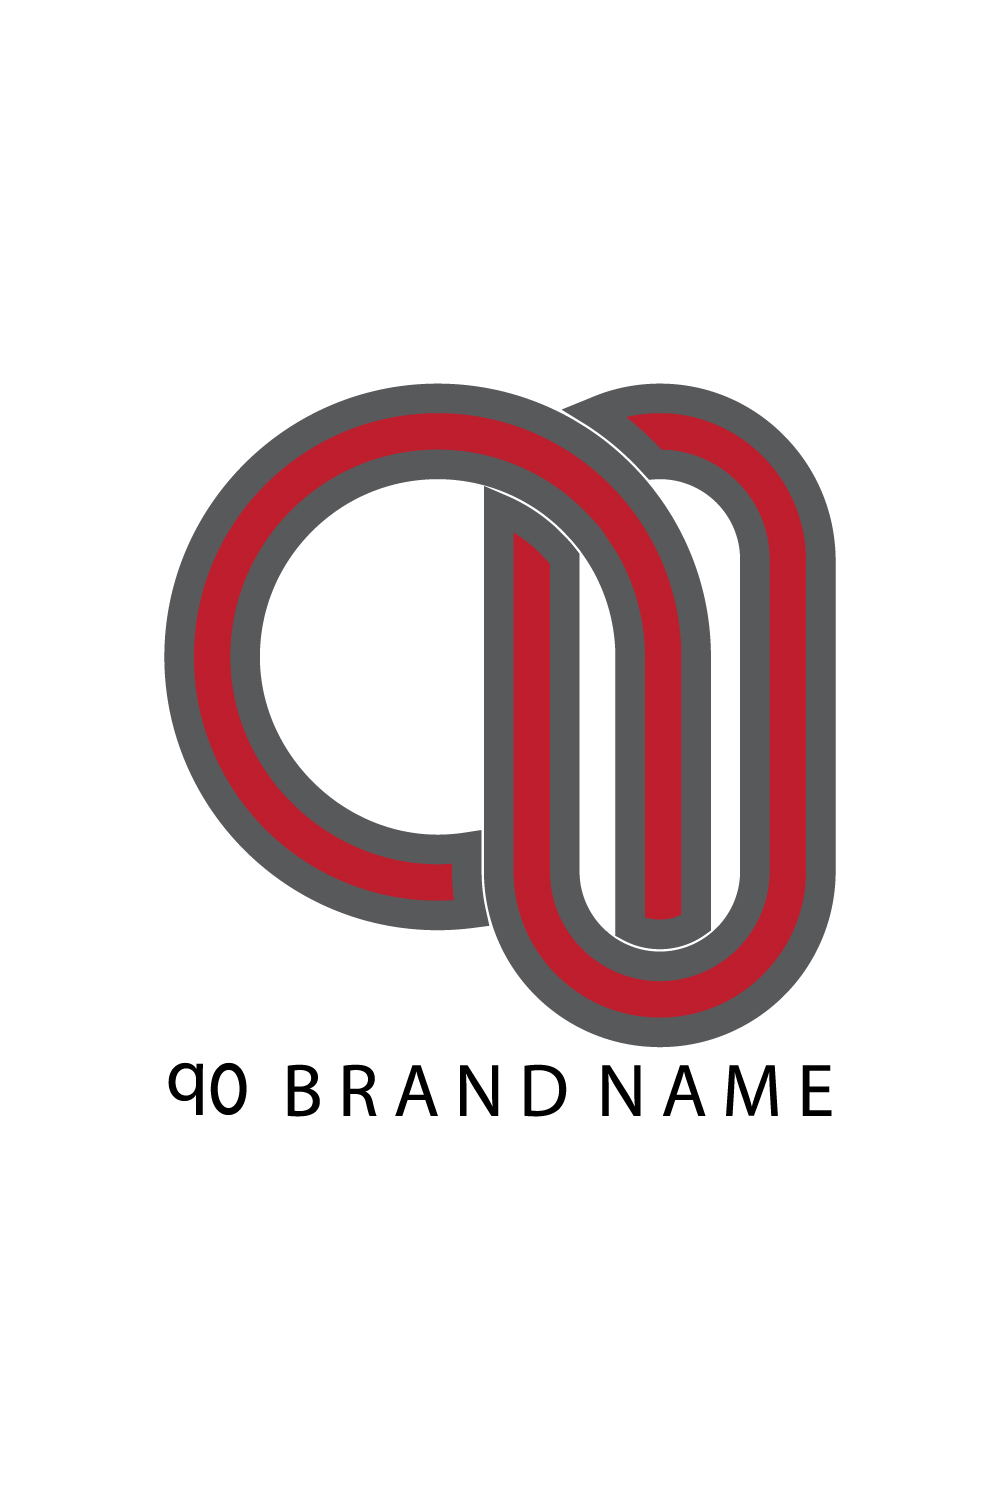 Initials QO letters logo design vector images design OQ logo red and black color royalty QO logo design company template illustration pinterest preview image.